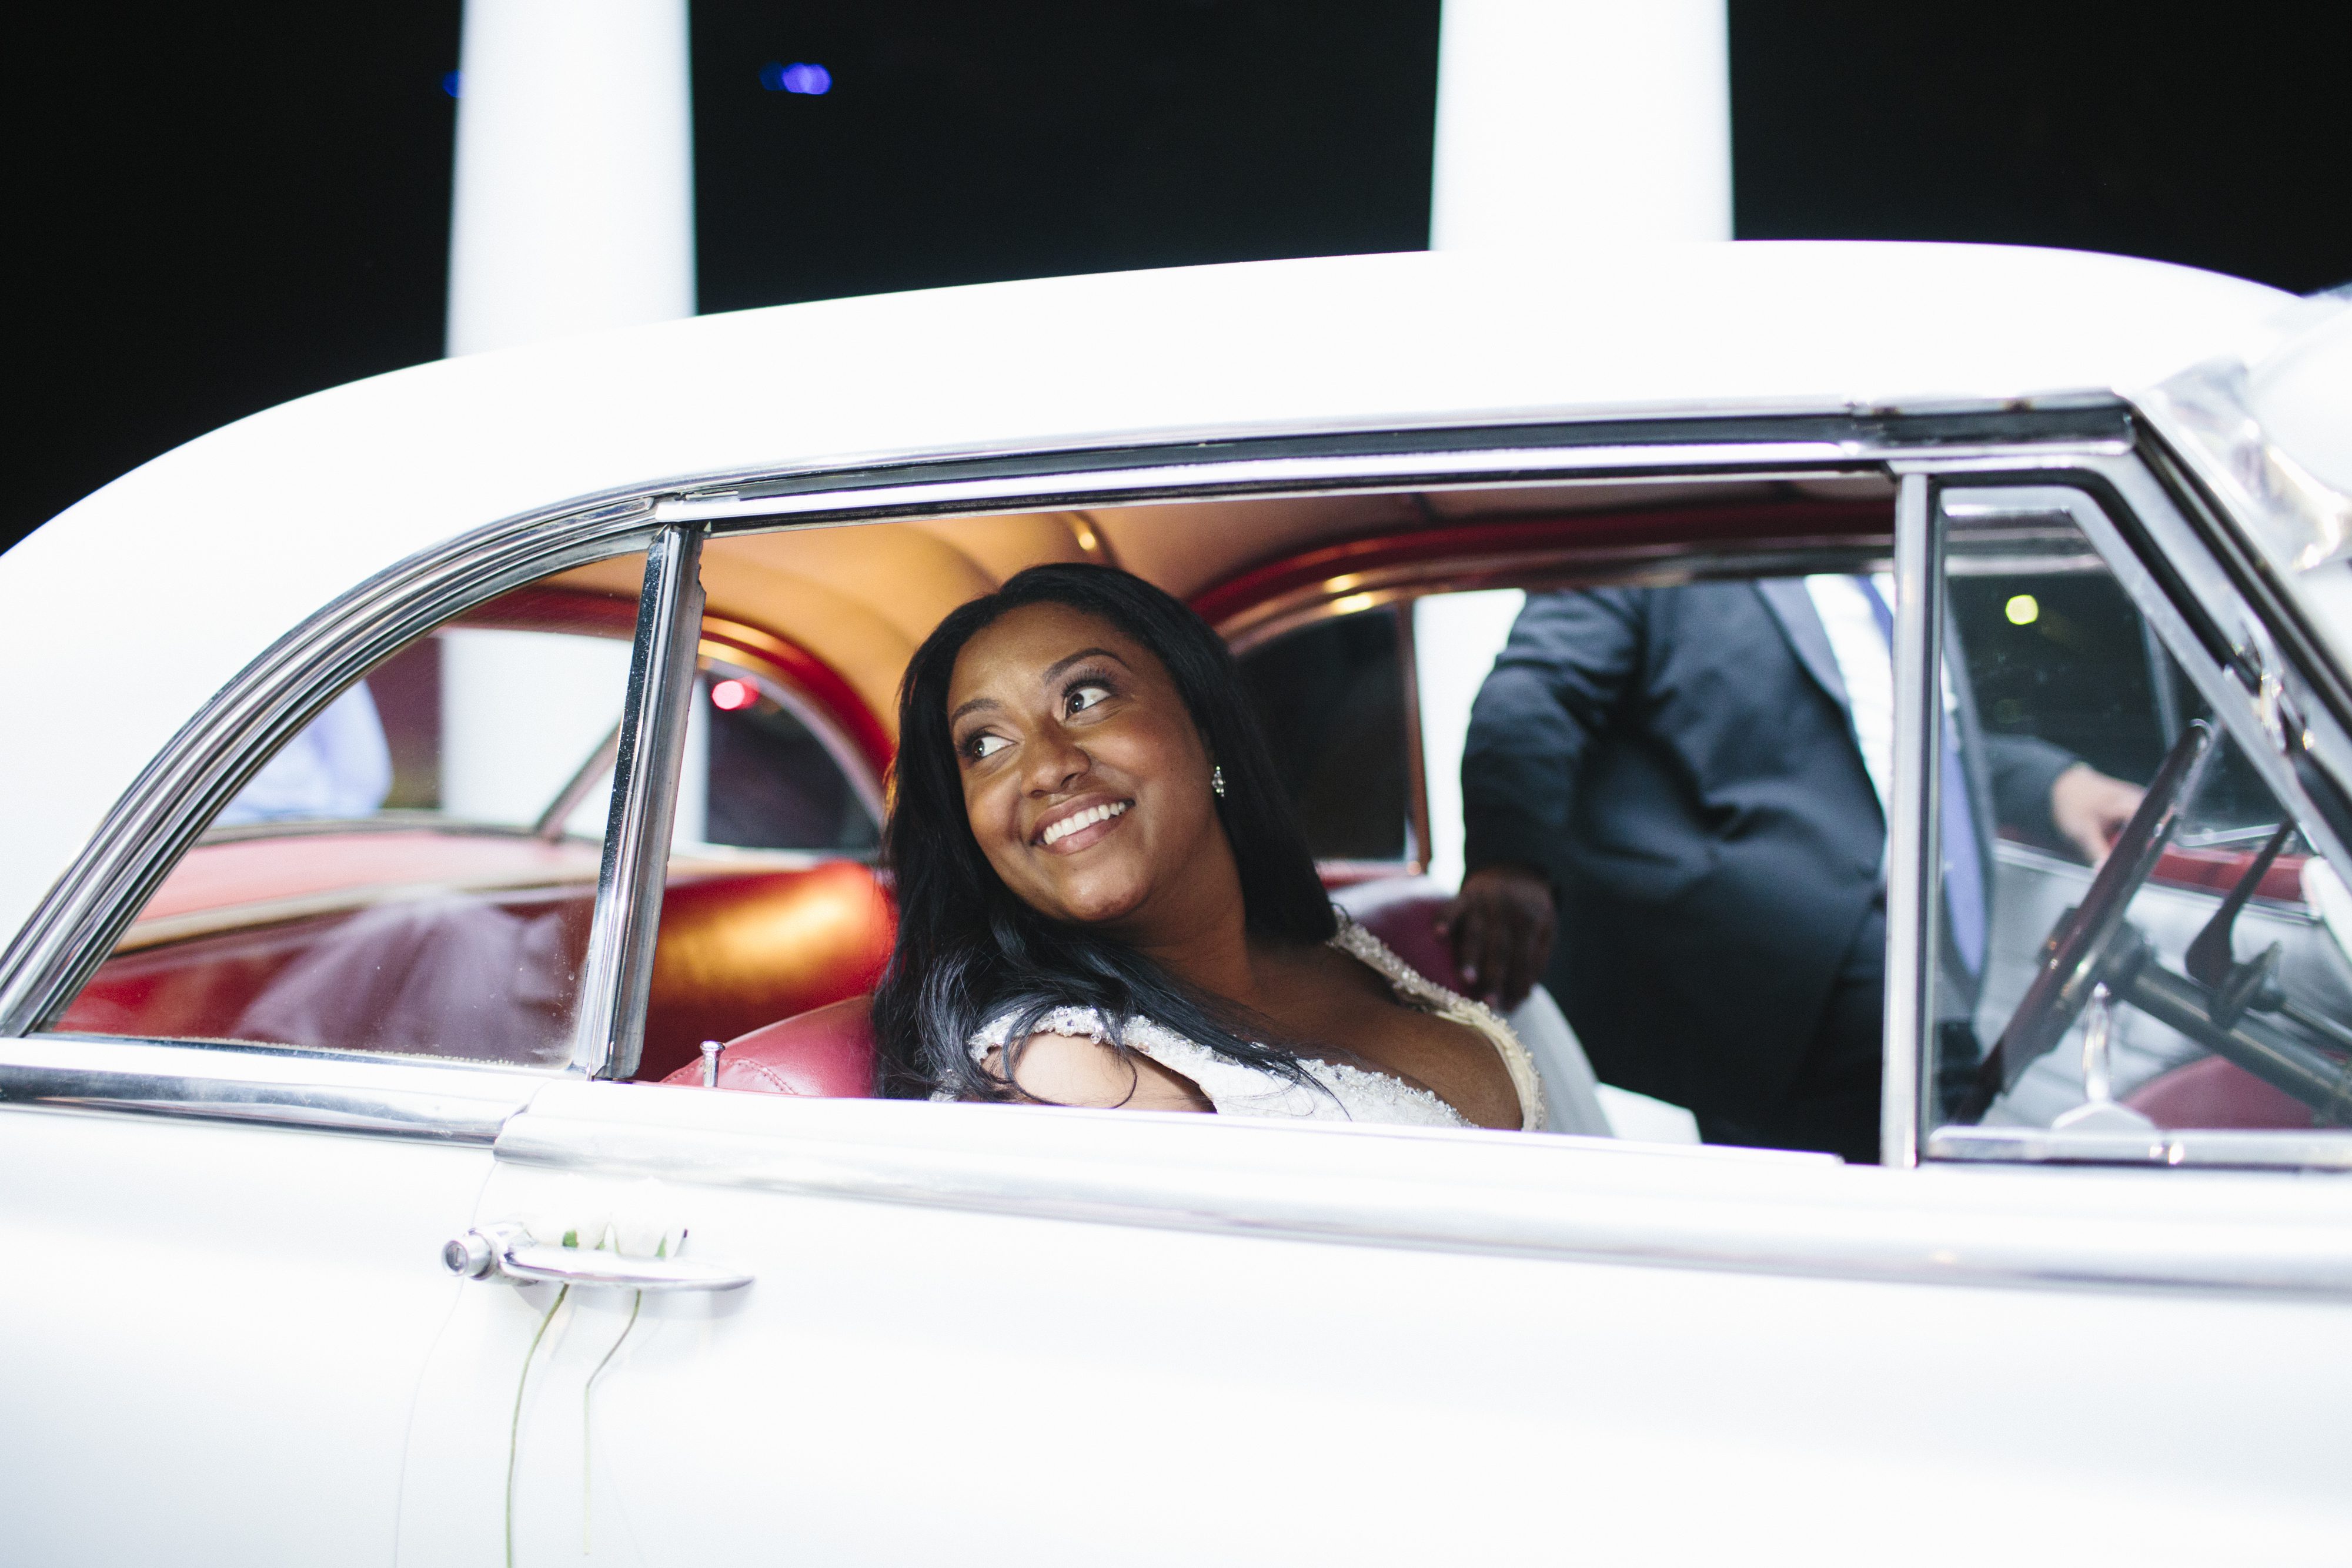 Bride and groom getaway in a vintage car